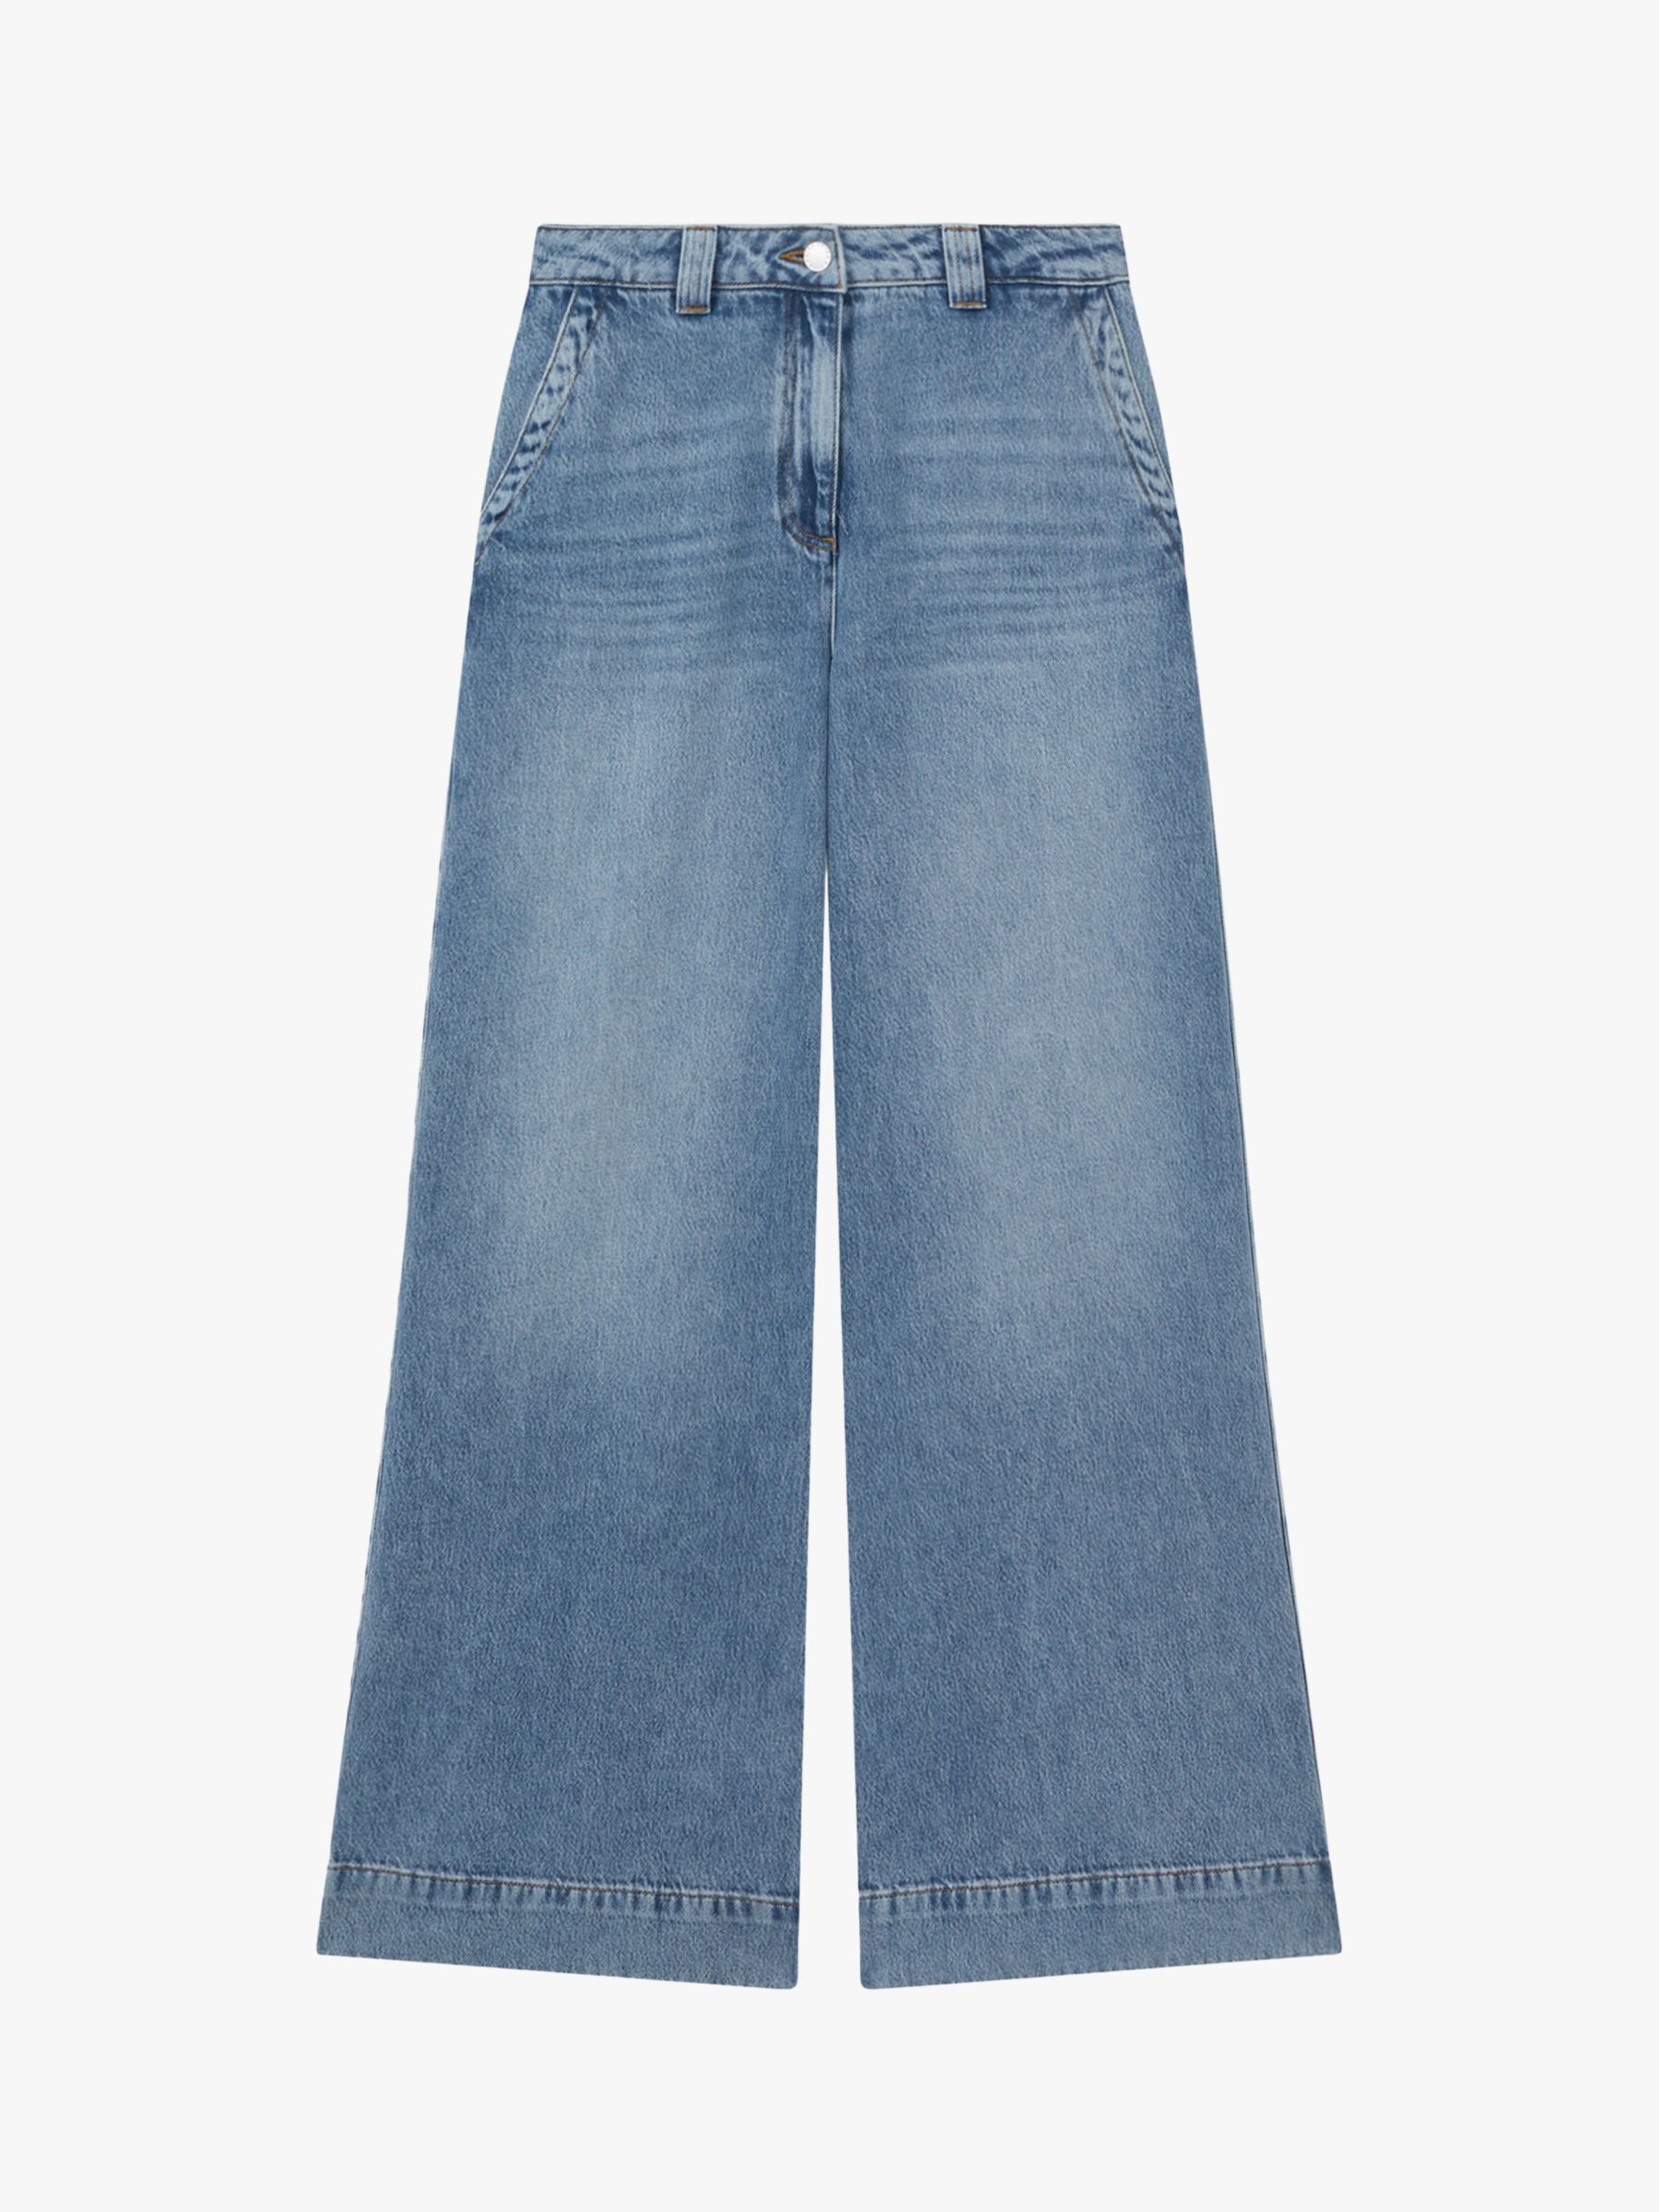 Reiss Olivia Flared Jeans, Light Blue, 24R